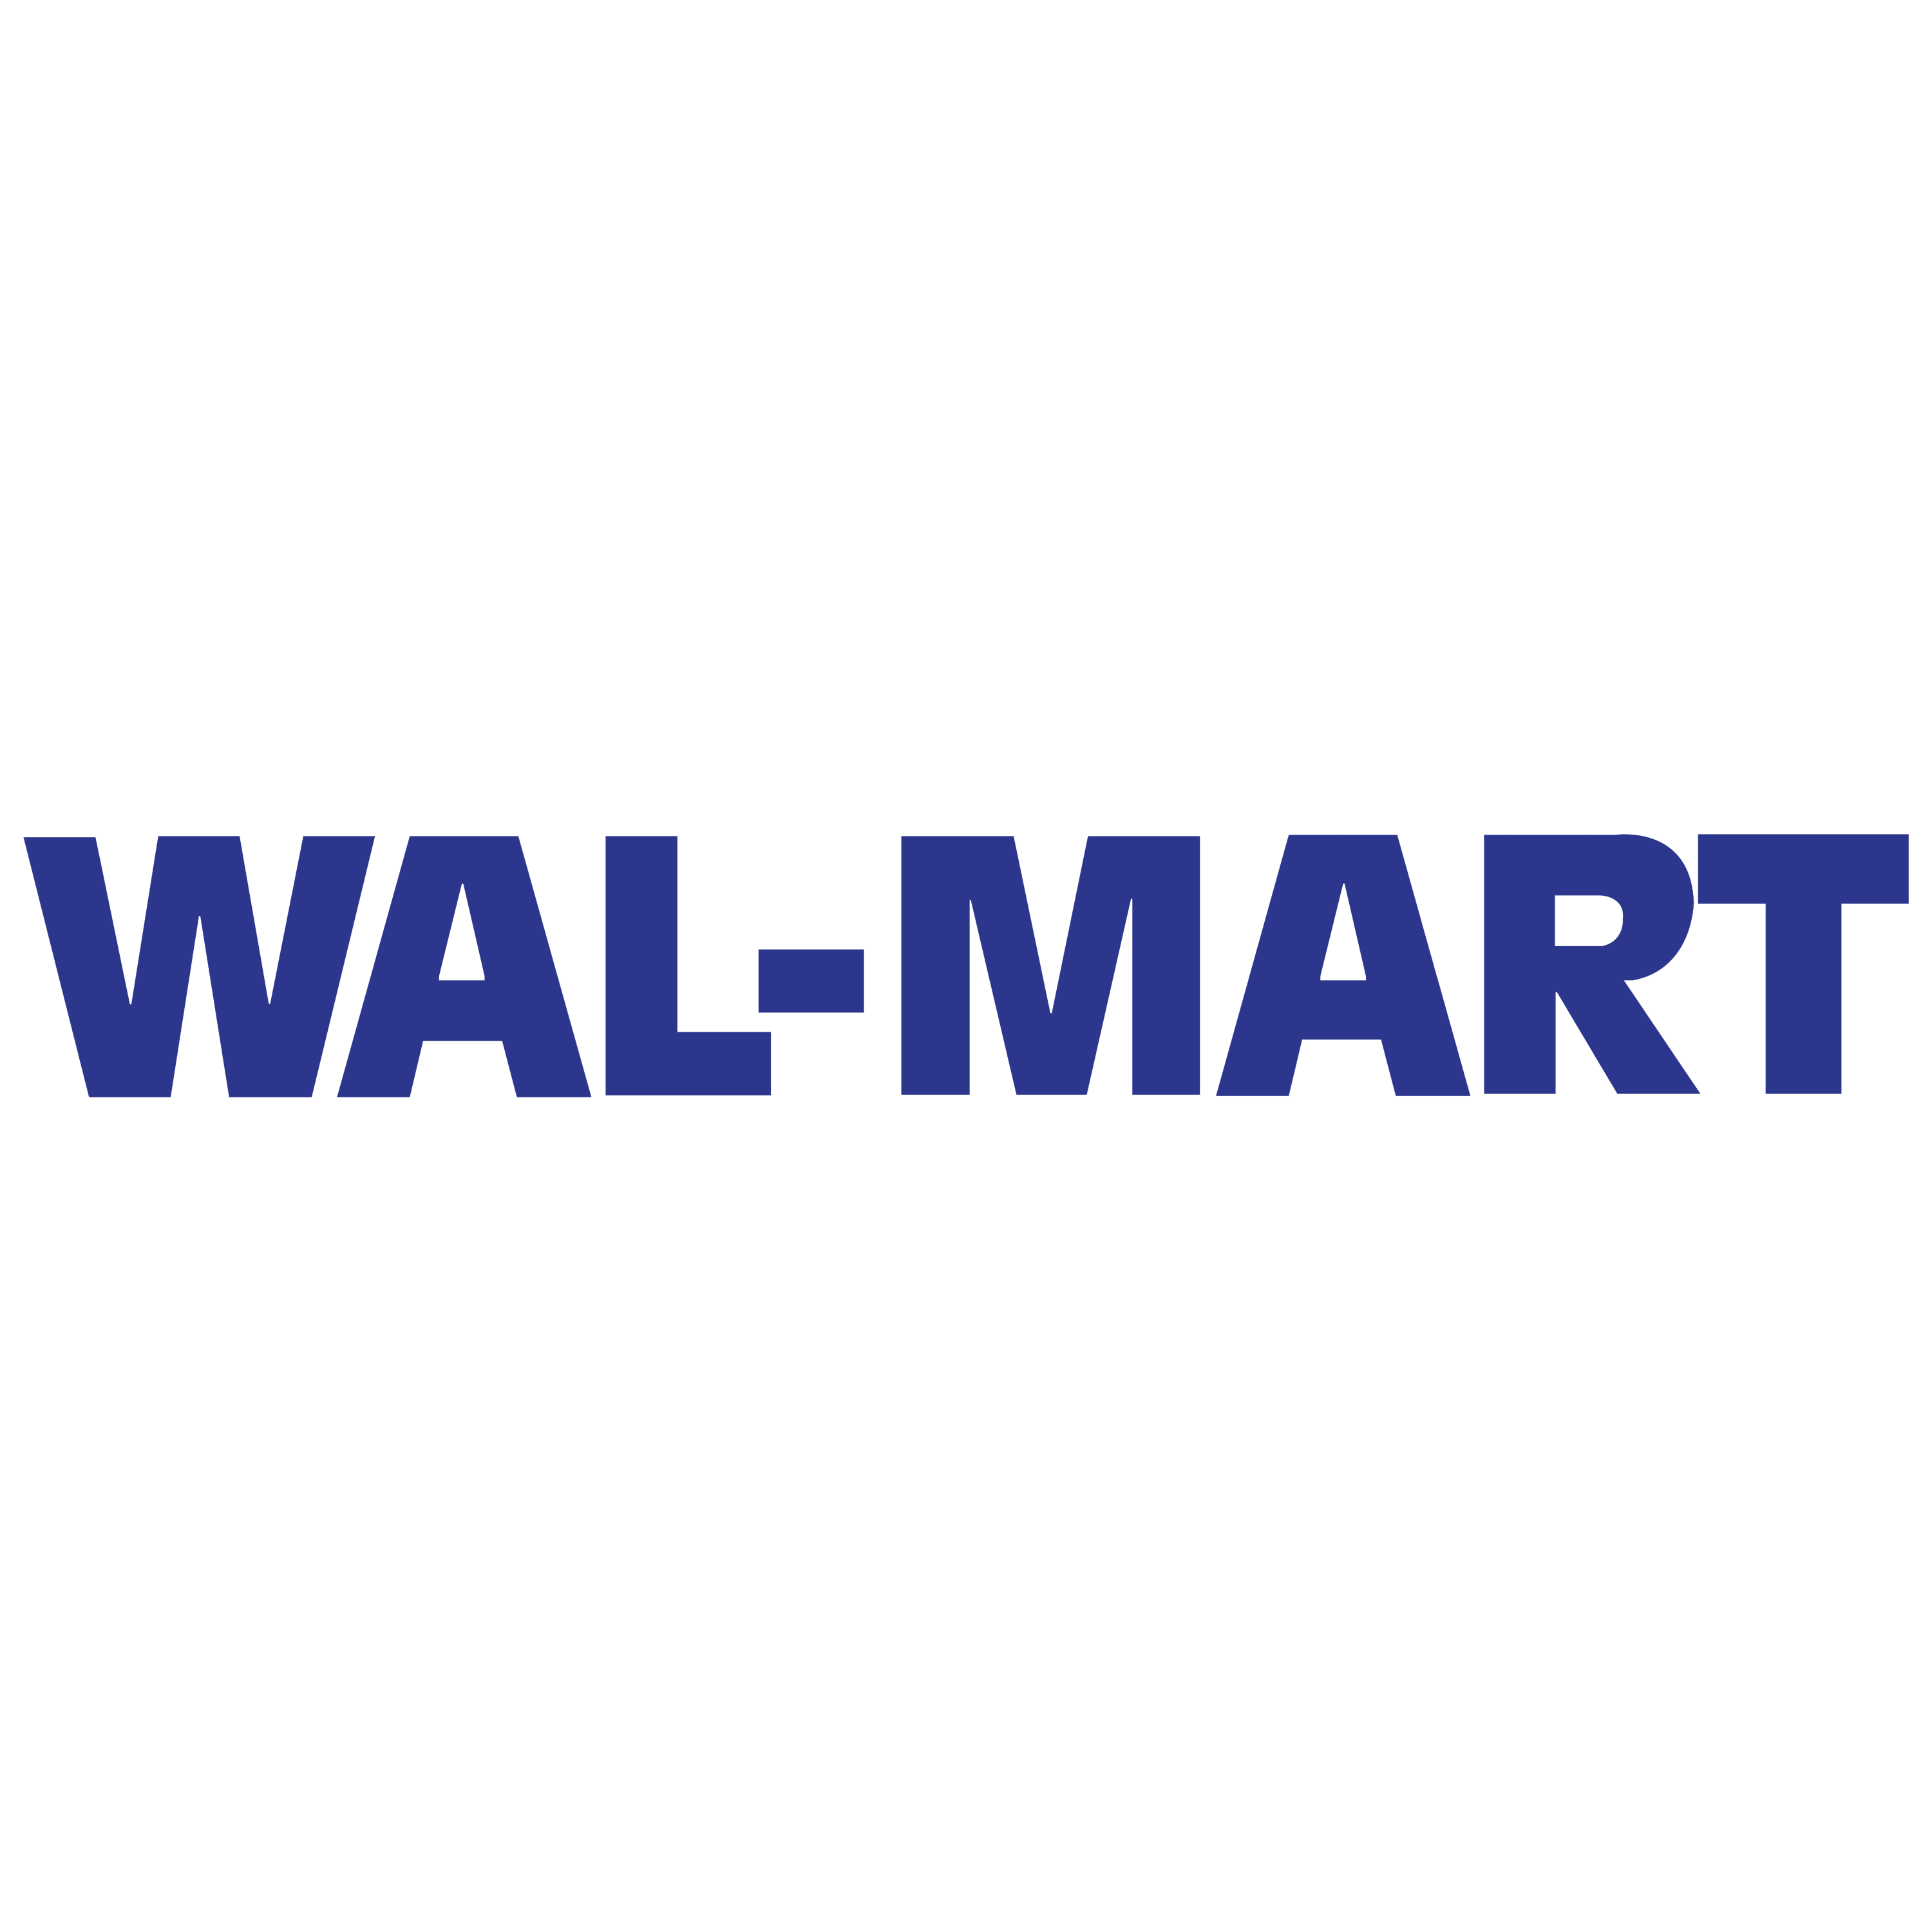 Walmart Spark 1980 Logo Transparent Image